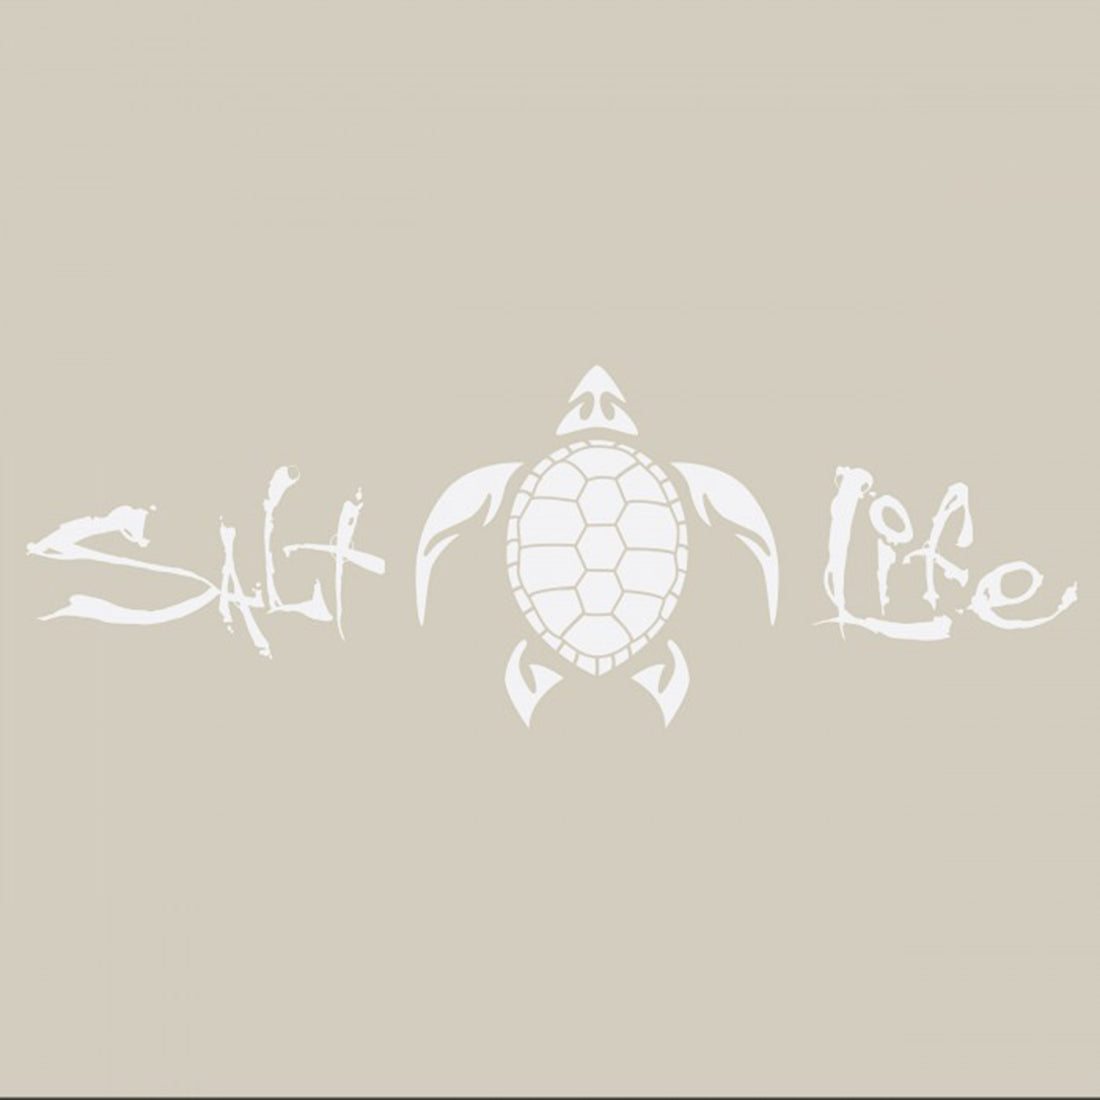 Salt Life Signature Turtle Decal Small White